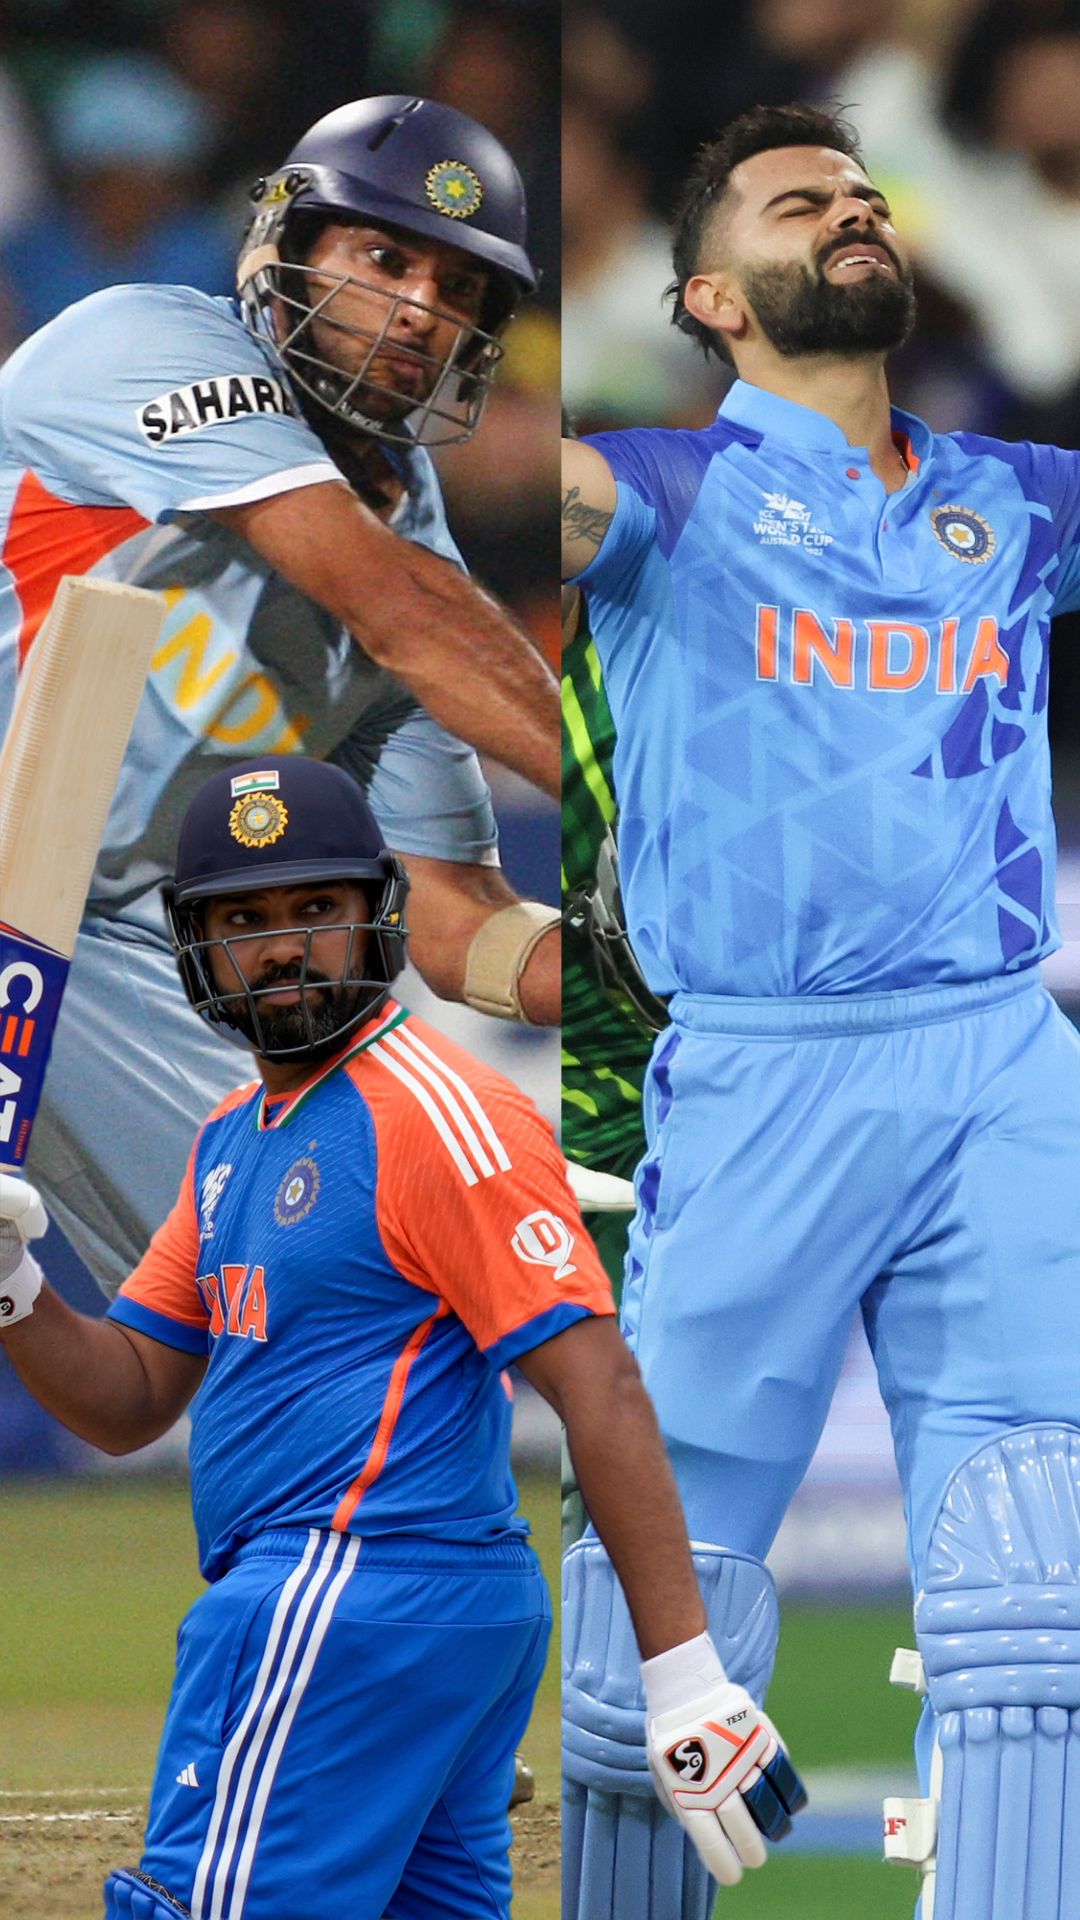 Top 10 knocks in T20 World Cup history by Indian batsmen feat Kohli special at MCG, Yuvraj's blast vs Australia